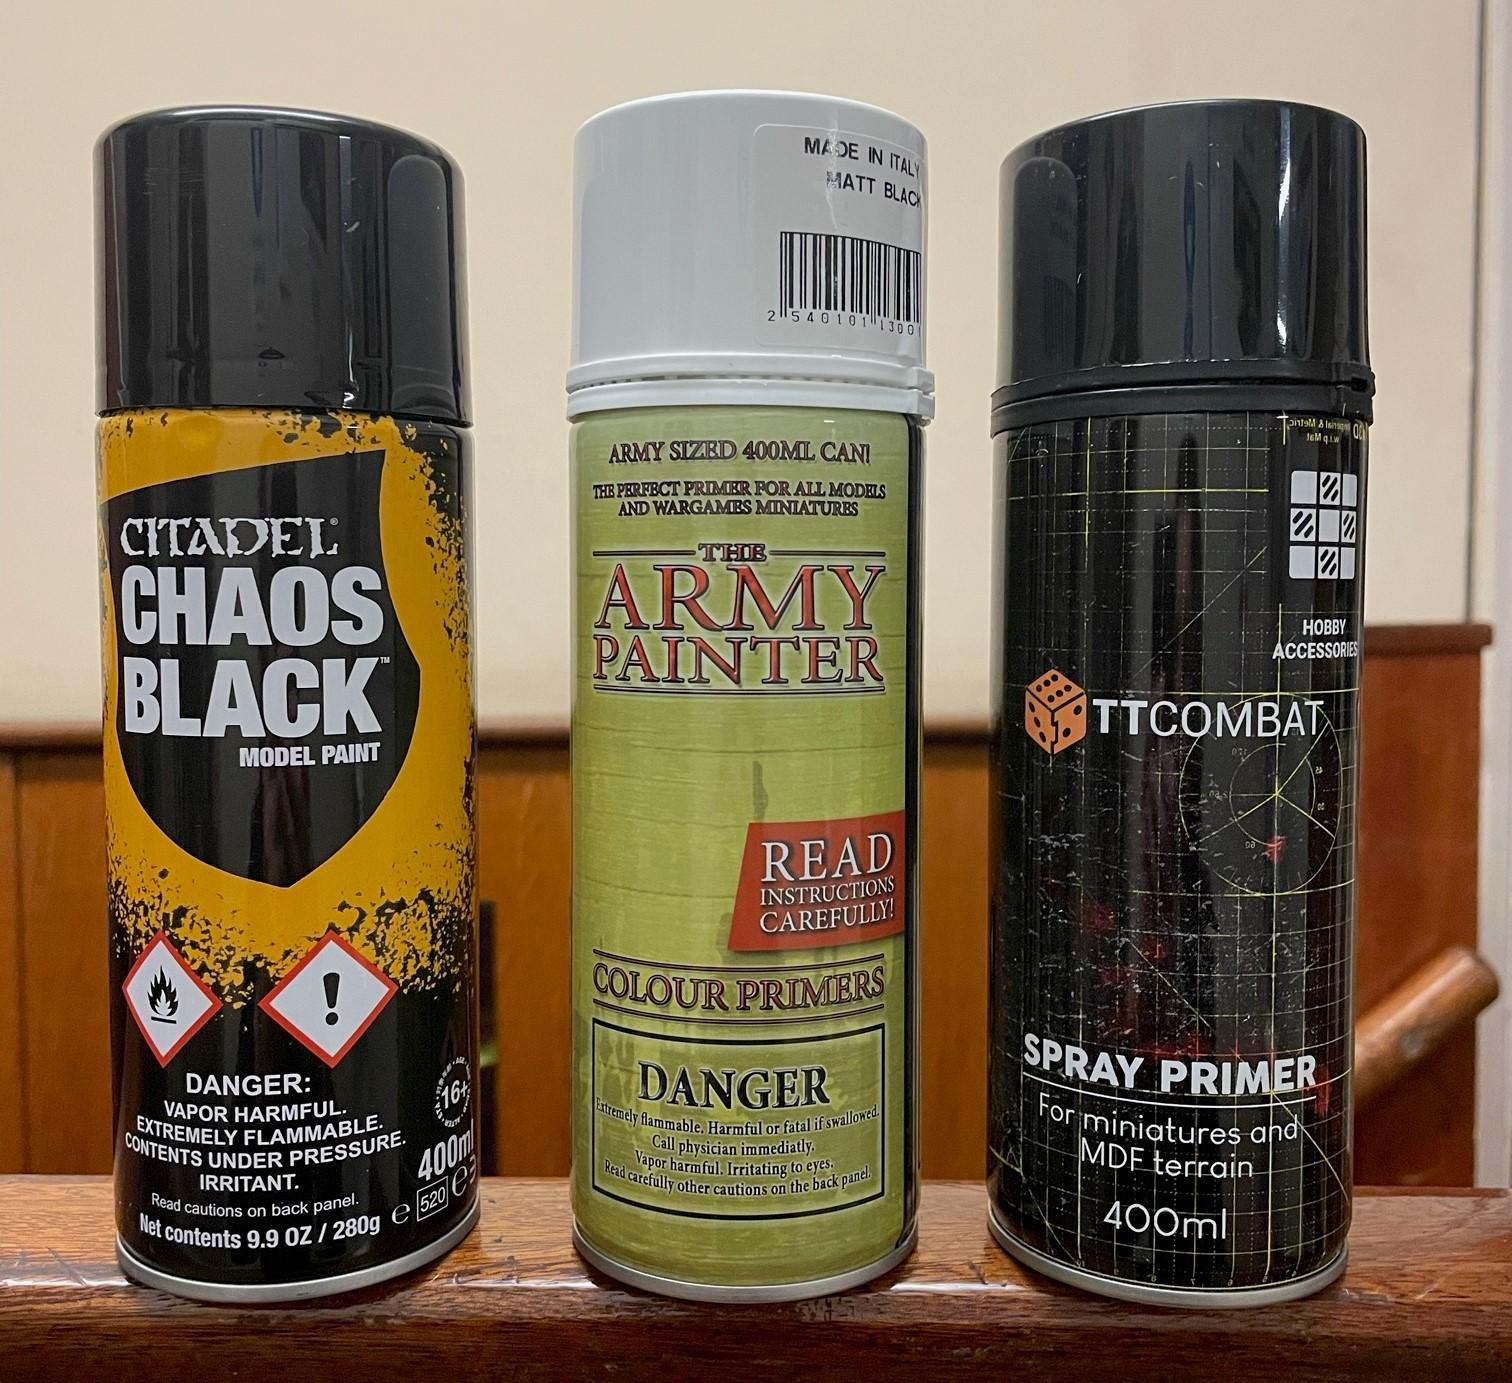 Army Painter Color Primer: Matt Black (400ml), Accessories & Supplies